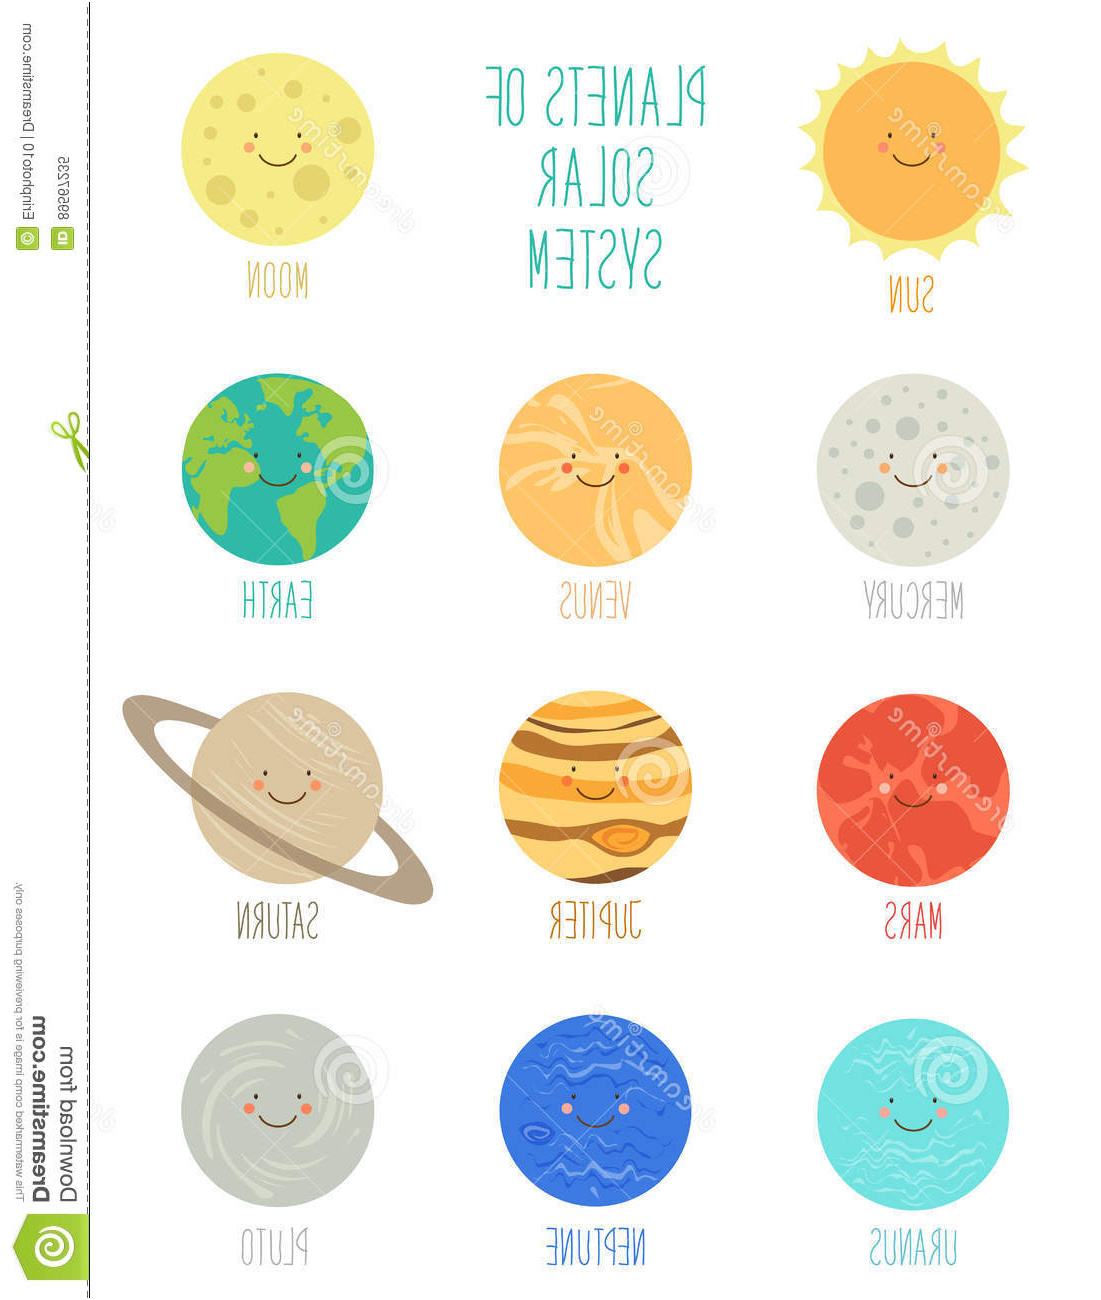 10 precieux coloriage planetes collection